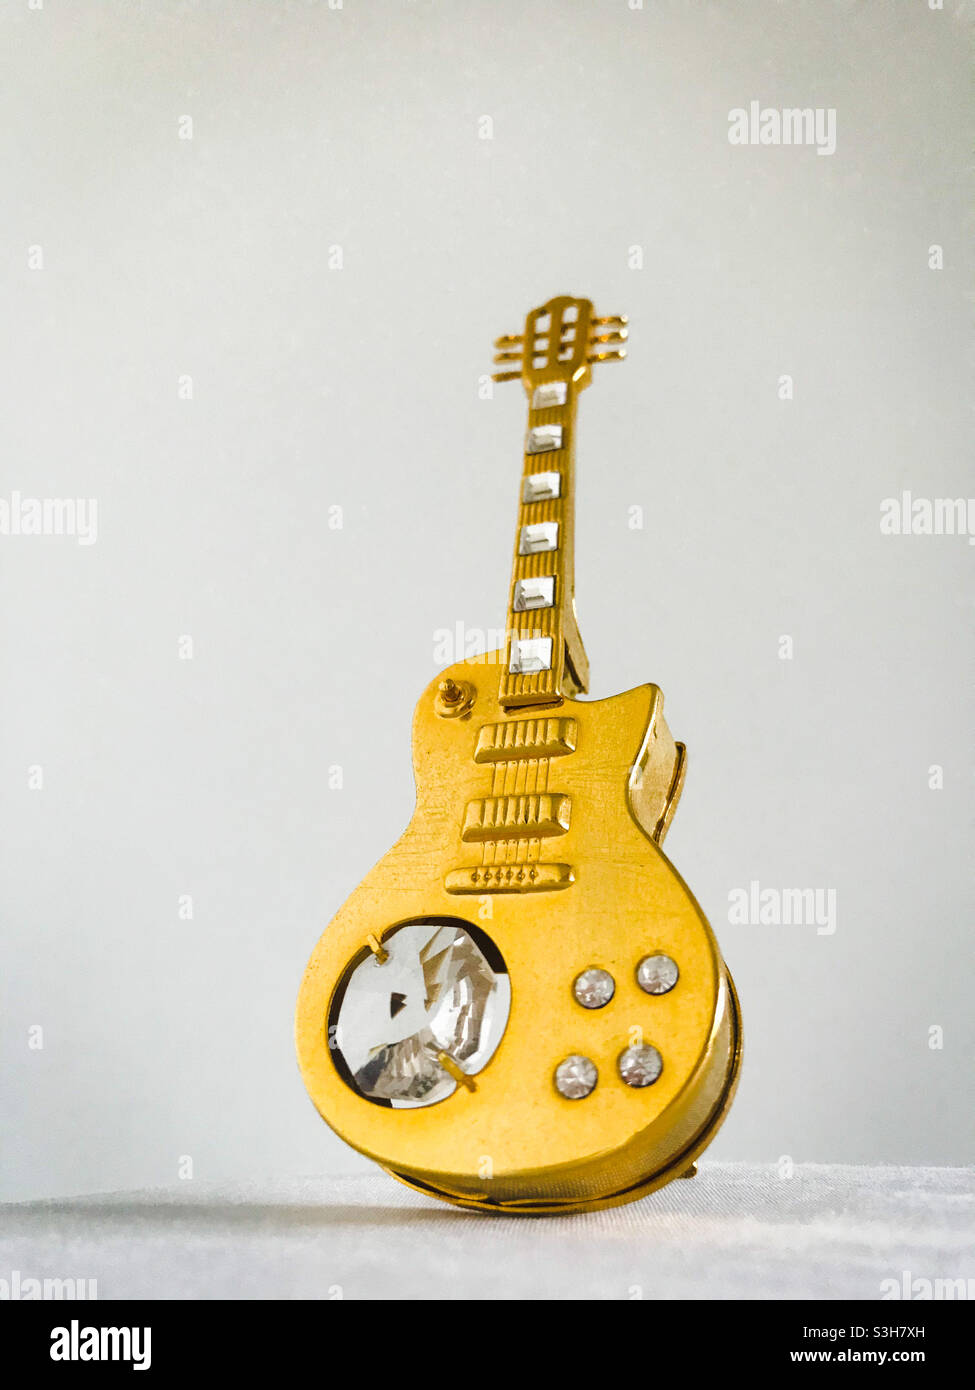 Petite guitare dorée Photo Stock - Alamy